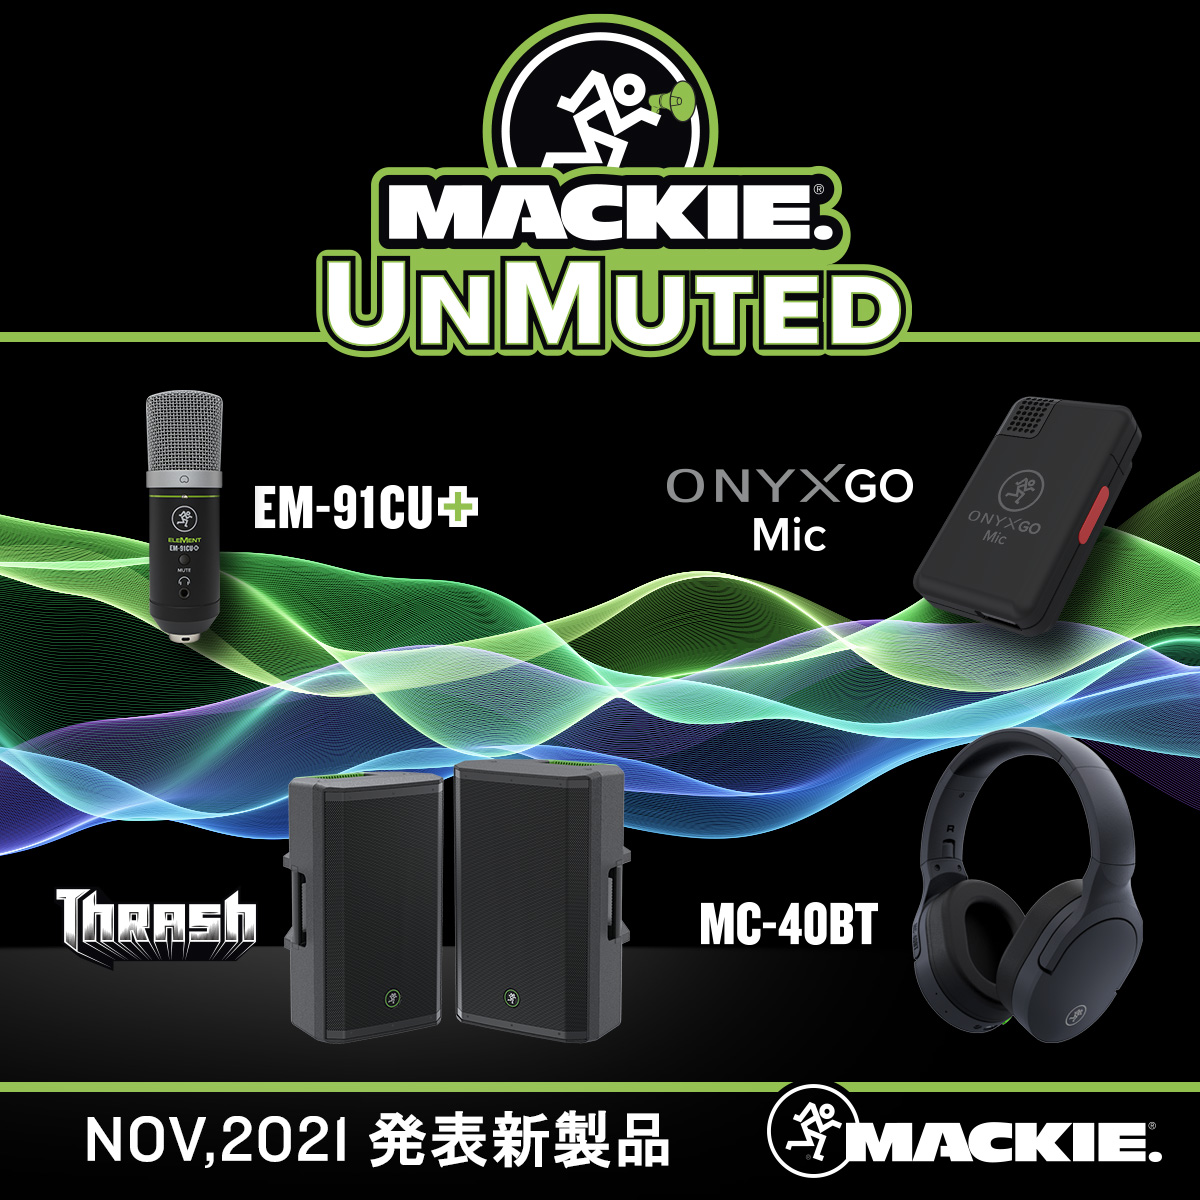 Mackie 新製品「Thrash」「Onyx GO Mic」「EM-91CU+」「MC-40BT」を